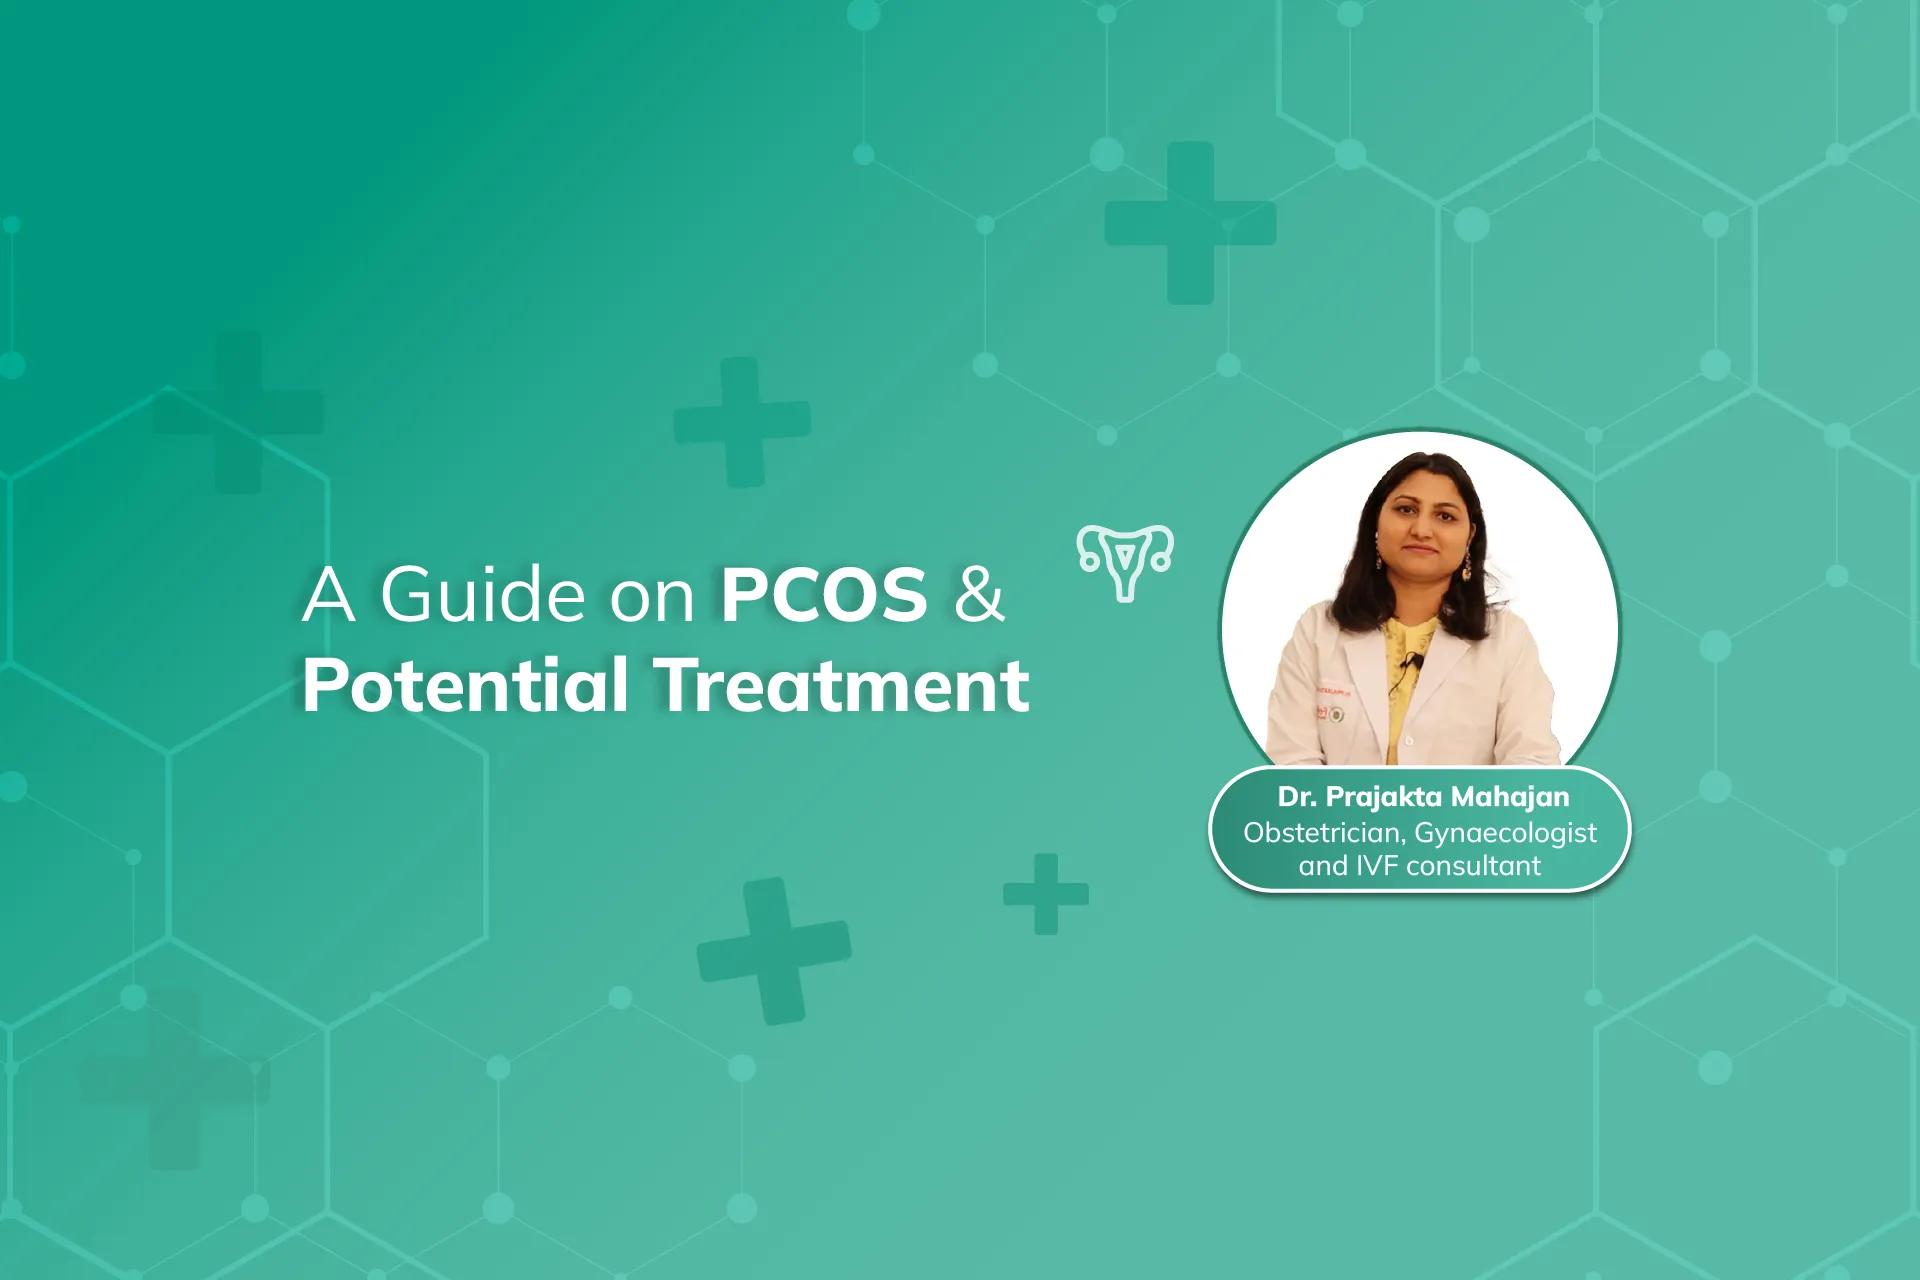 Polycystic Ovary Syndrome: Causes, Symptoms & Treatment by Dr. Prajakta Mahajan